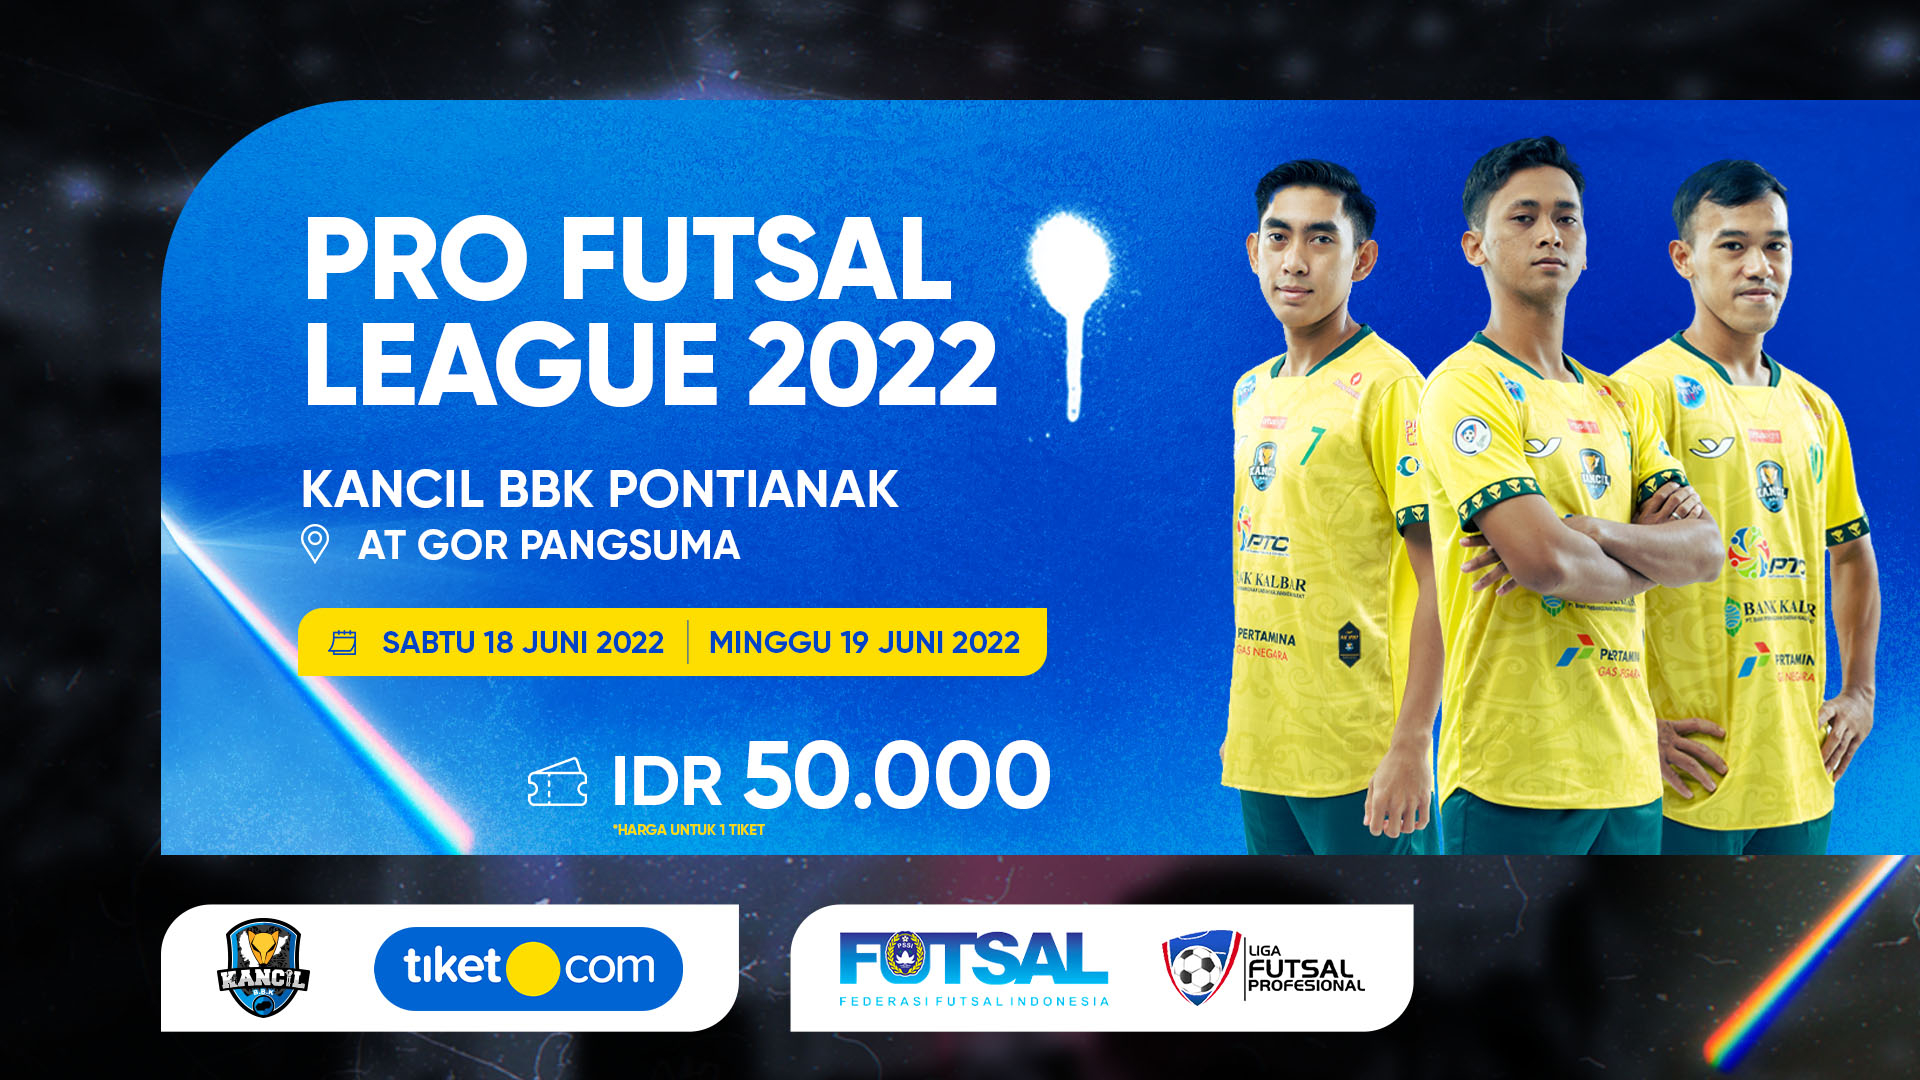 Beli Tiket Pro Futsal League 2022 Kancil BBK Pontianak Promo Januari